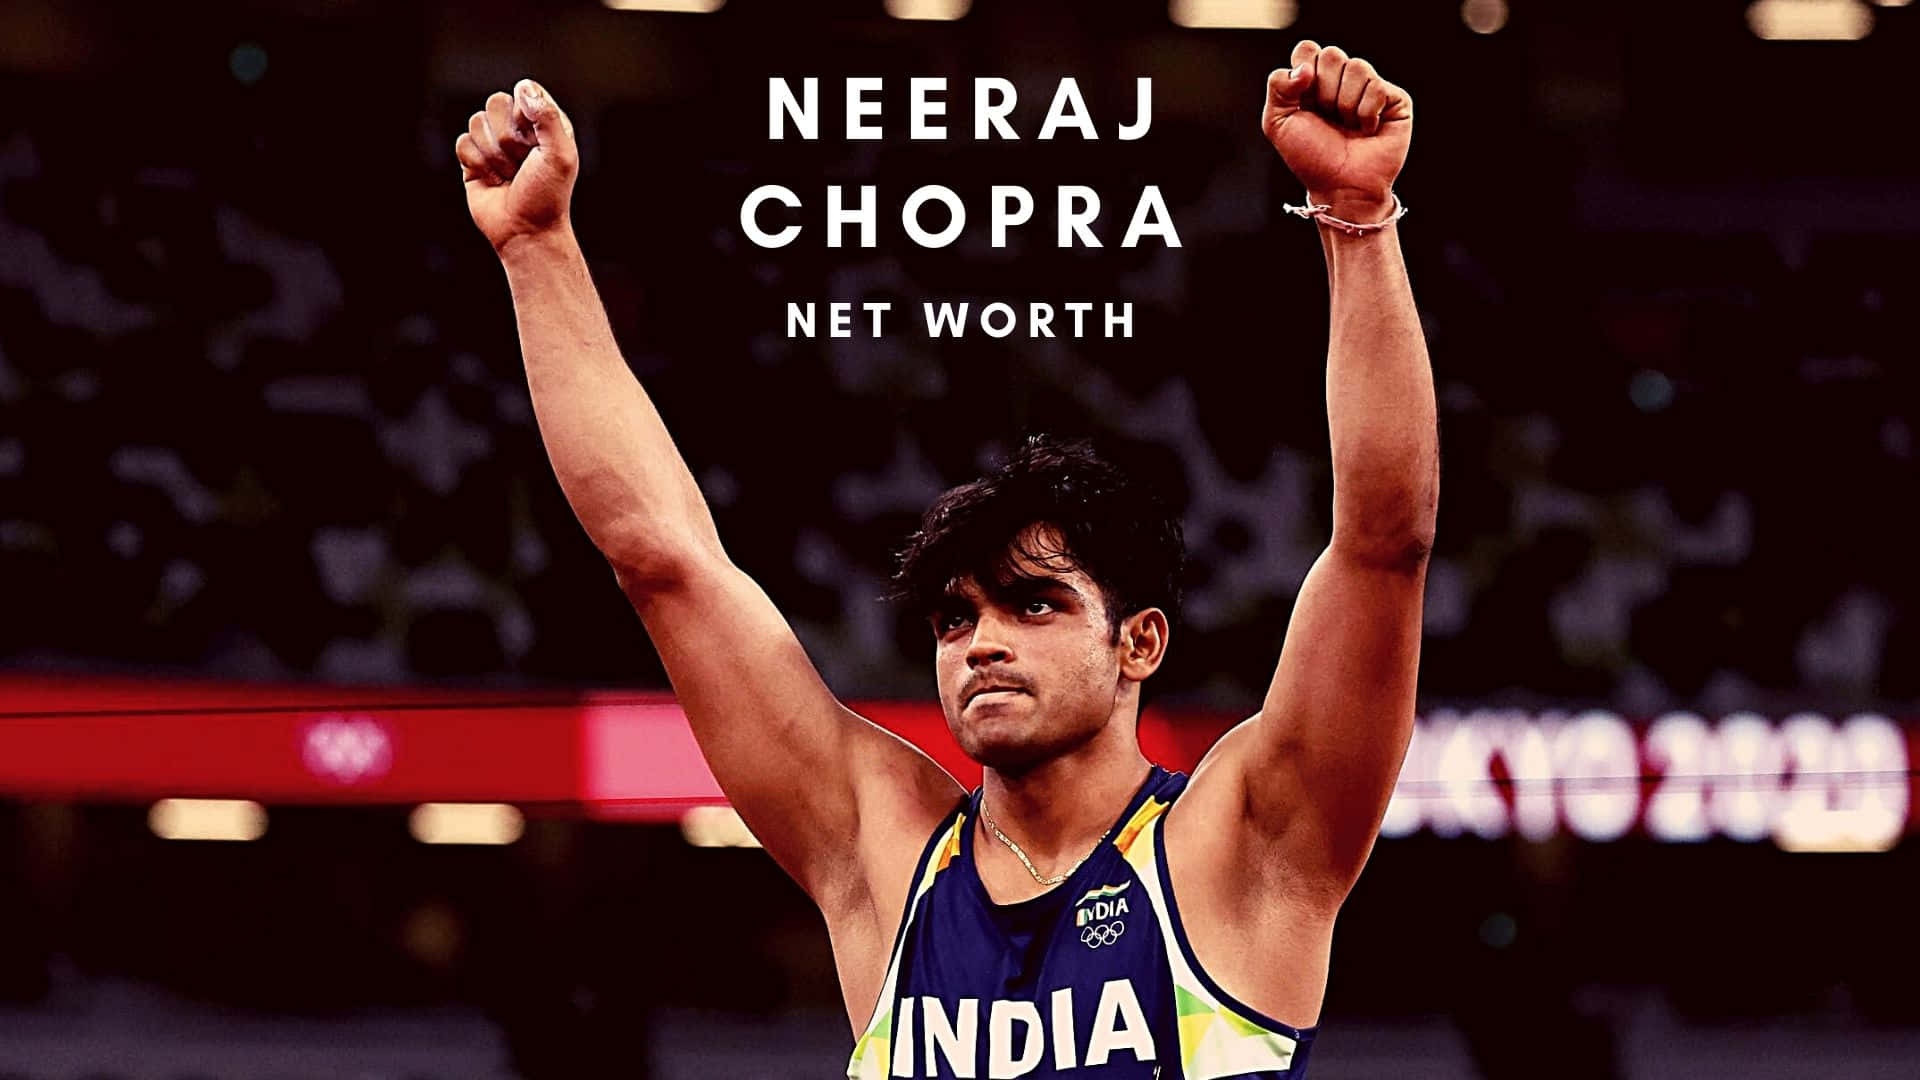 Indian javelin champion and Olympian Neeraj Chopra